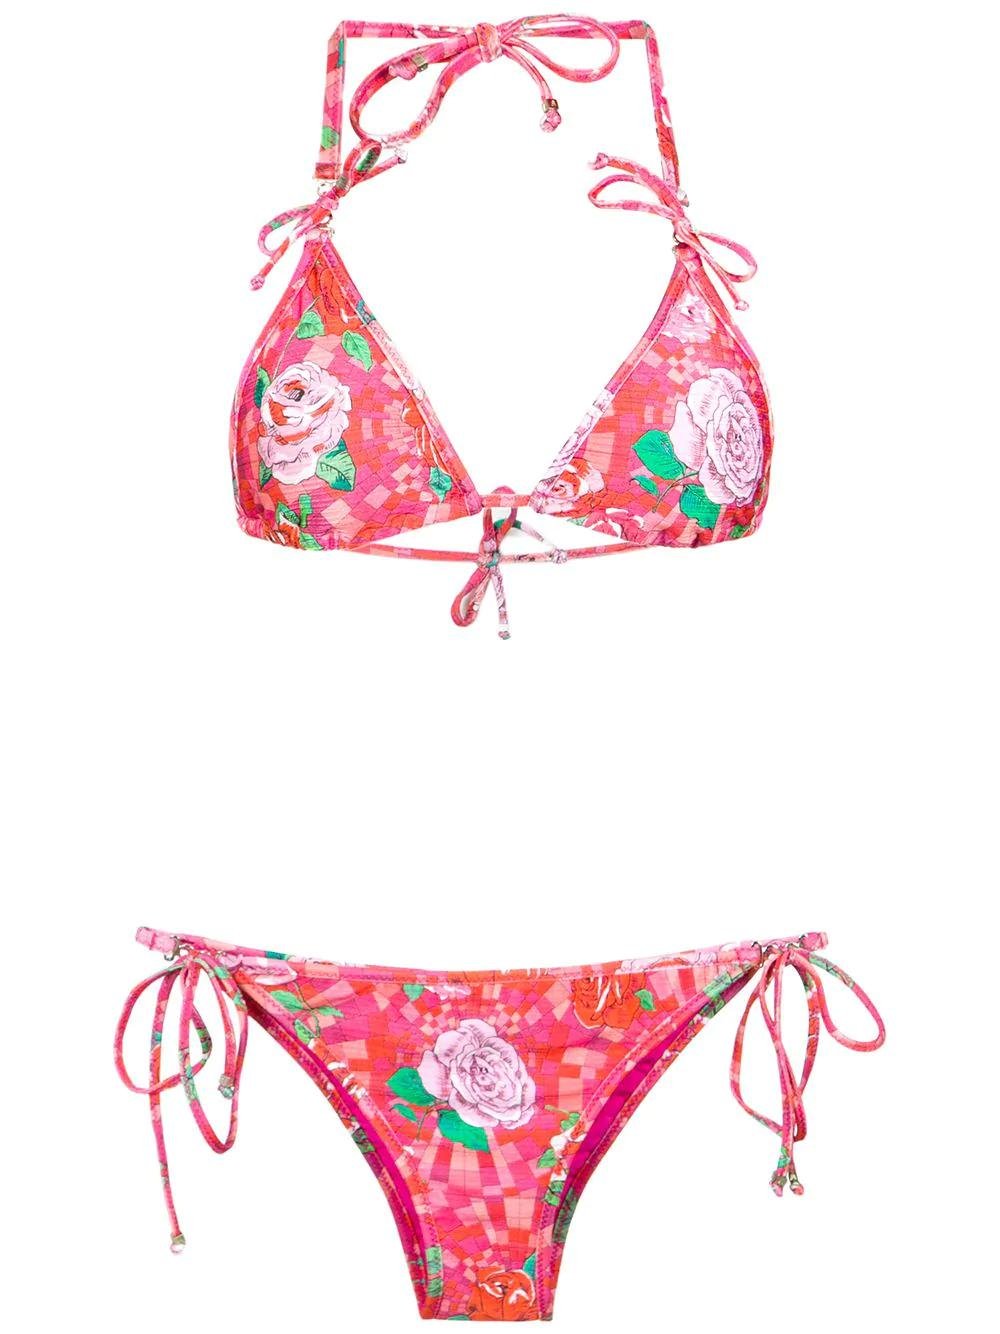 floral print bikini set by AMIR SLAMA